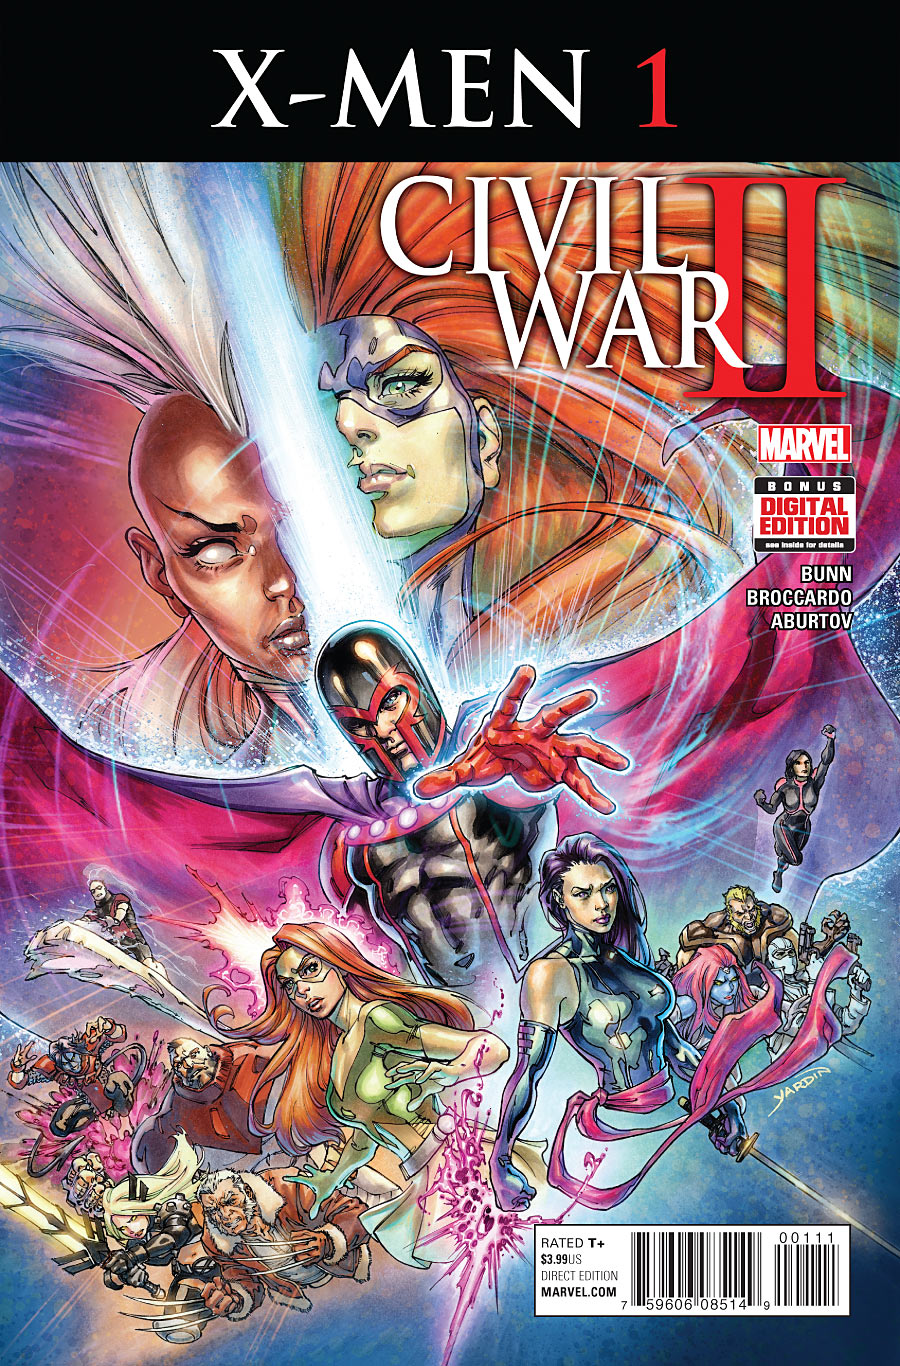 Civil War II X-Men Issue 1 Marvel